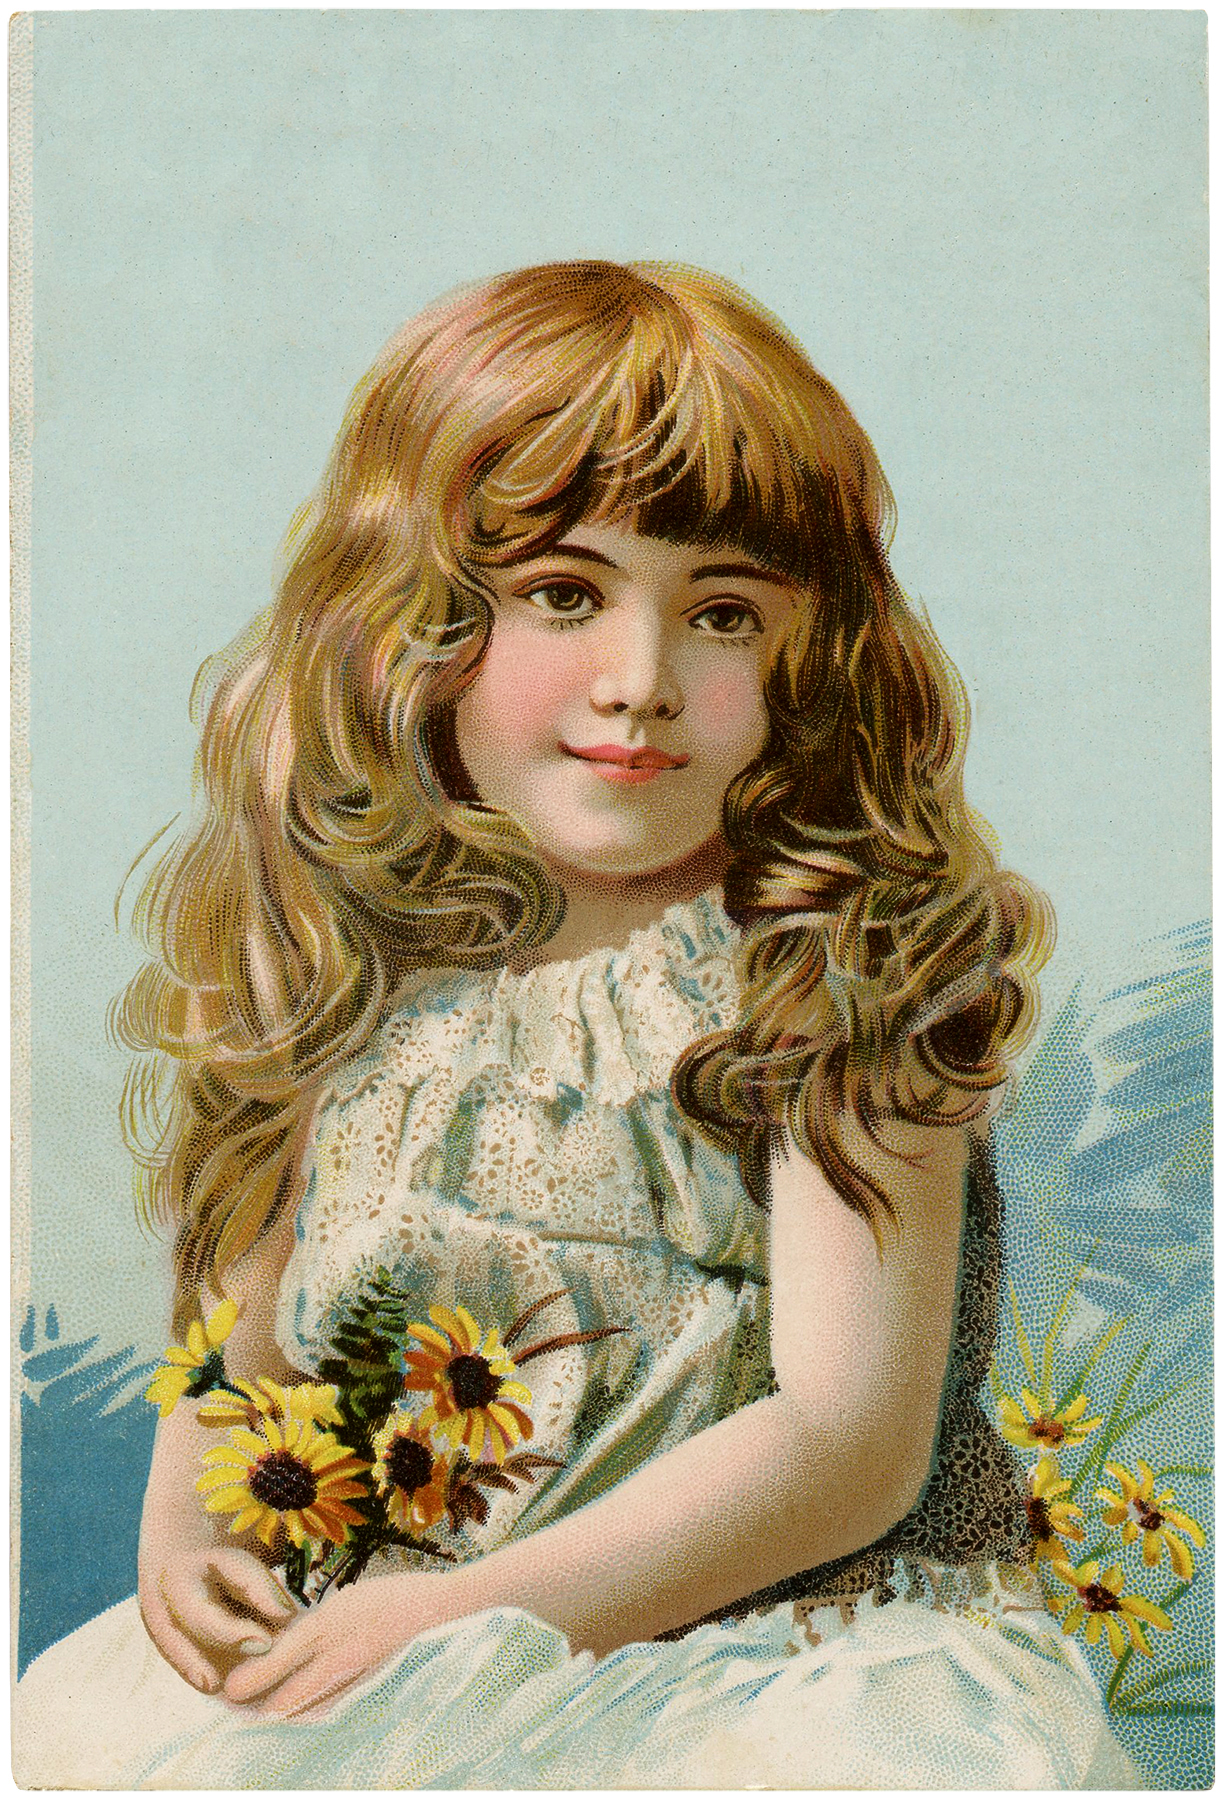 Old Photo - Pretty Little Garden Girl - The Graphics Fairy